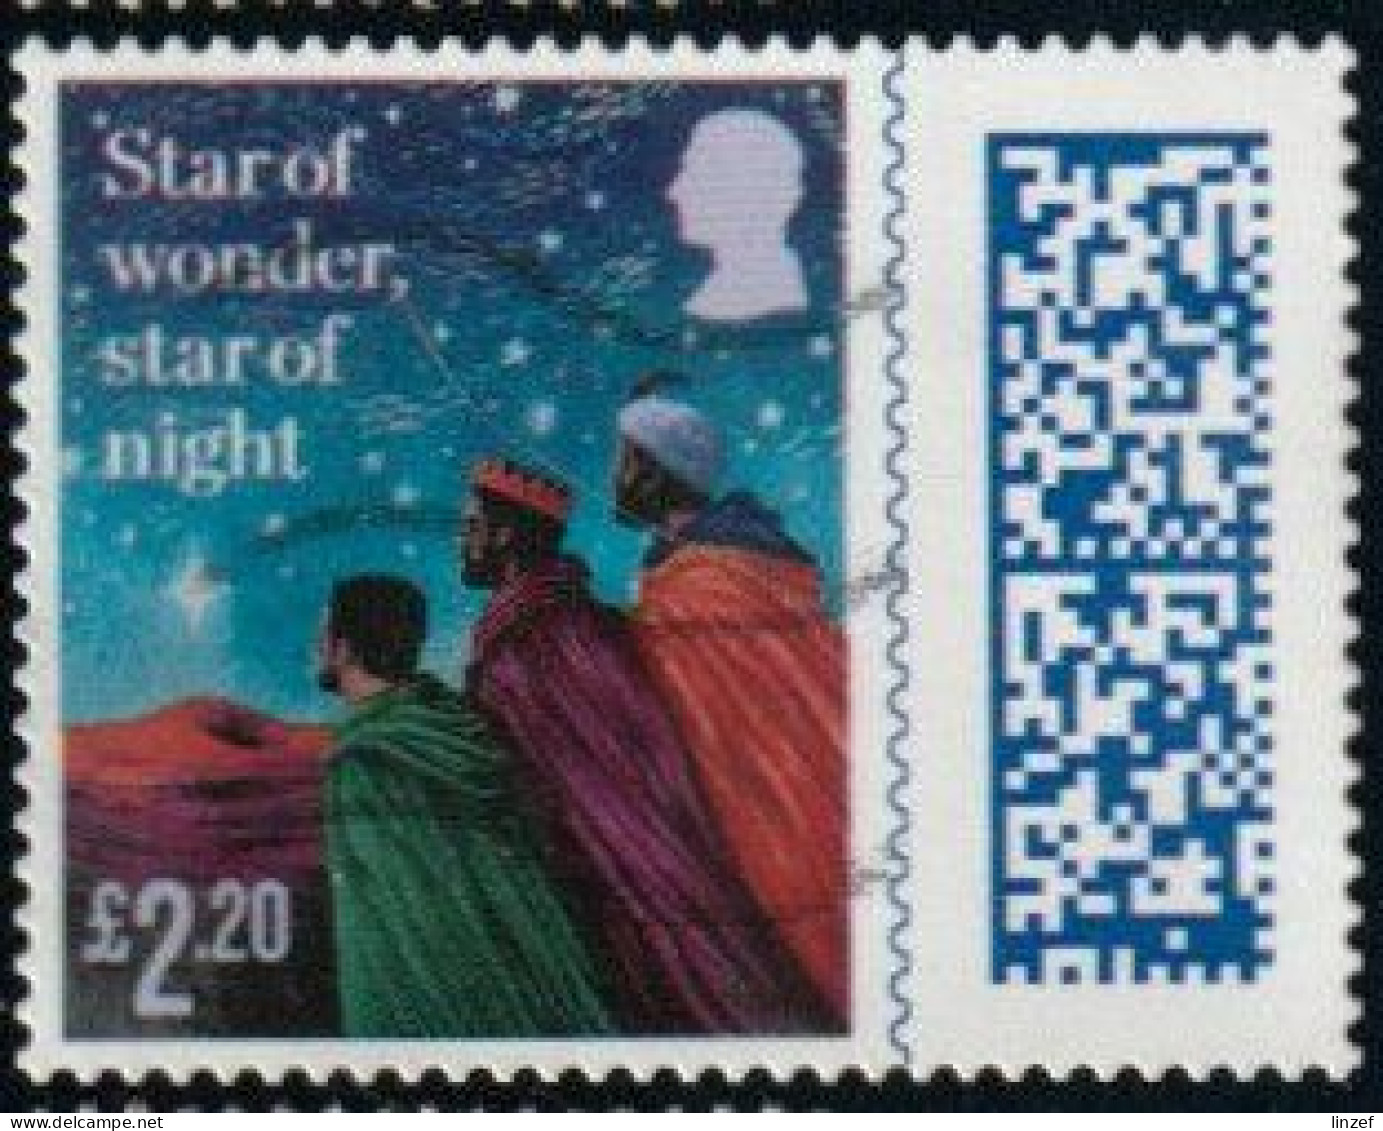 GB 2023 - Noël - 2,20£ Star Of Wonder, Star Of Night - Oblitéré - Used Stamps